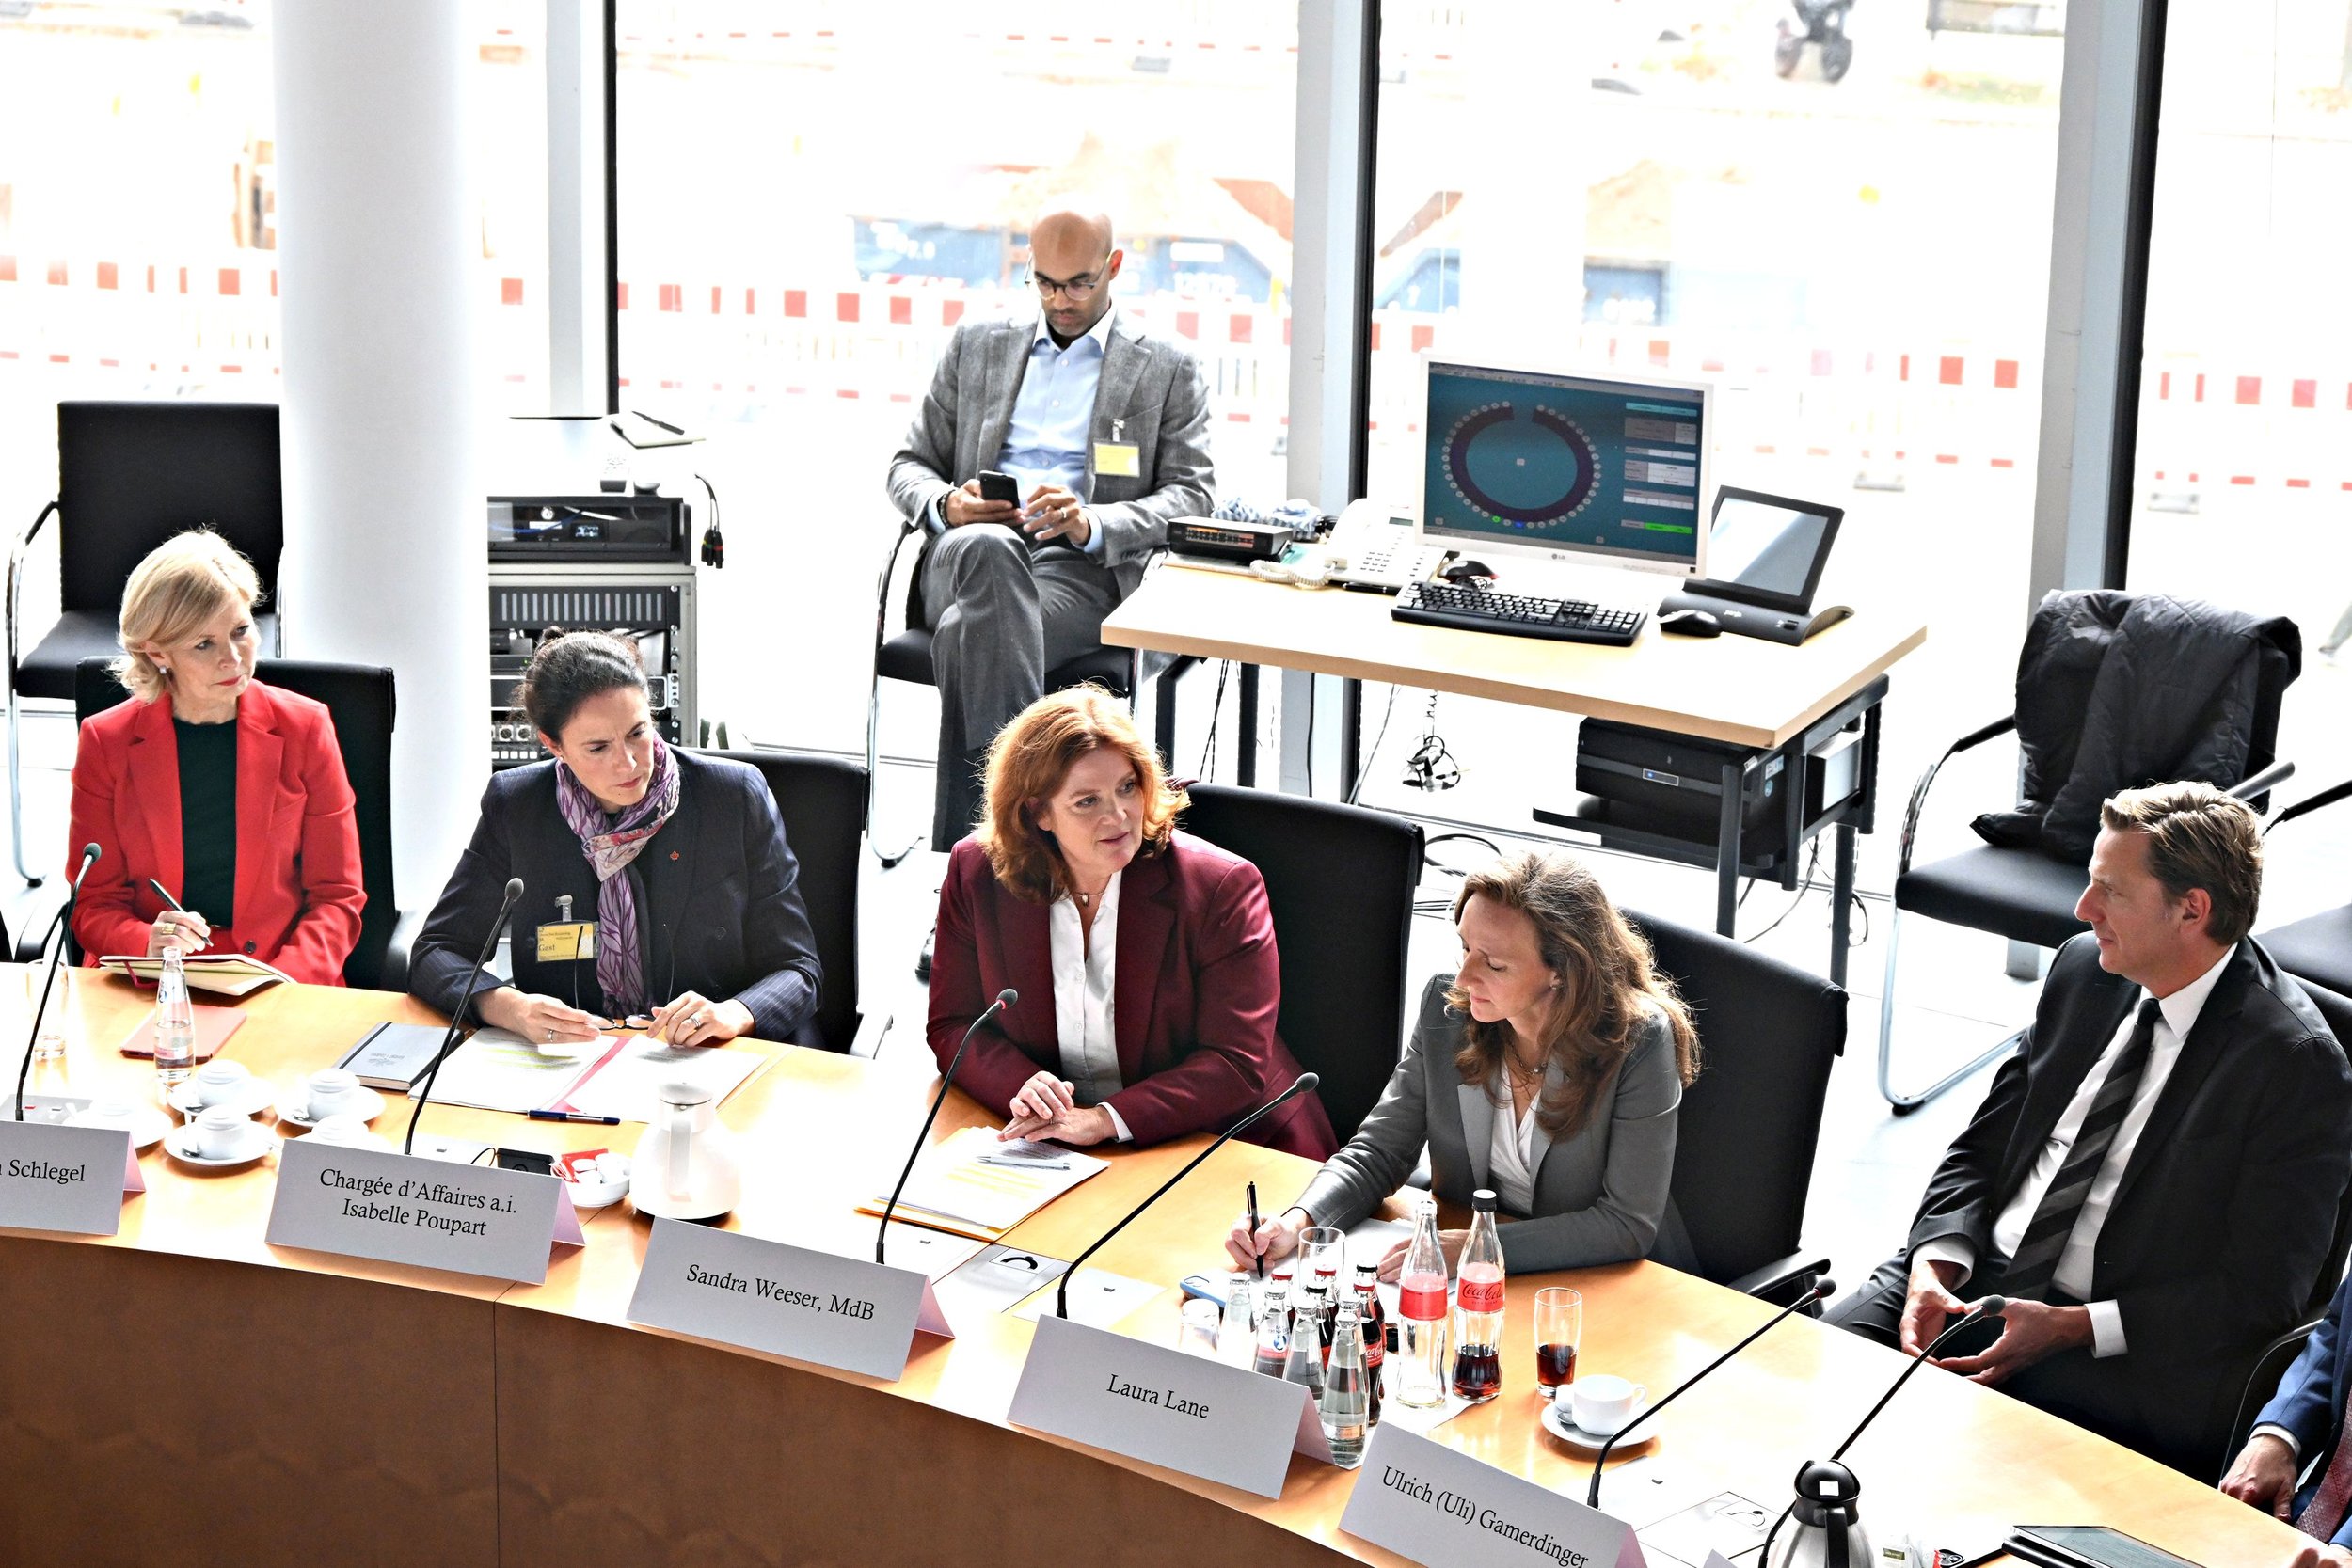  From left: Nancy Ziuzin Schlegel (Lockheed Martin), Chargée d’Affaires a.i. Isabelle Poupart (Canadian Embassy to Germany), Sandra Weeser, MP (German Bundestag), GABC Chair Laura Lane, GABC President &amp; CEO Ulrich (Uli) Gamerdinger    